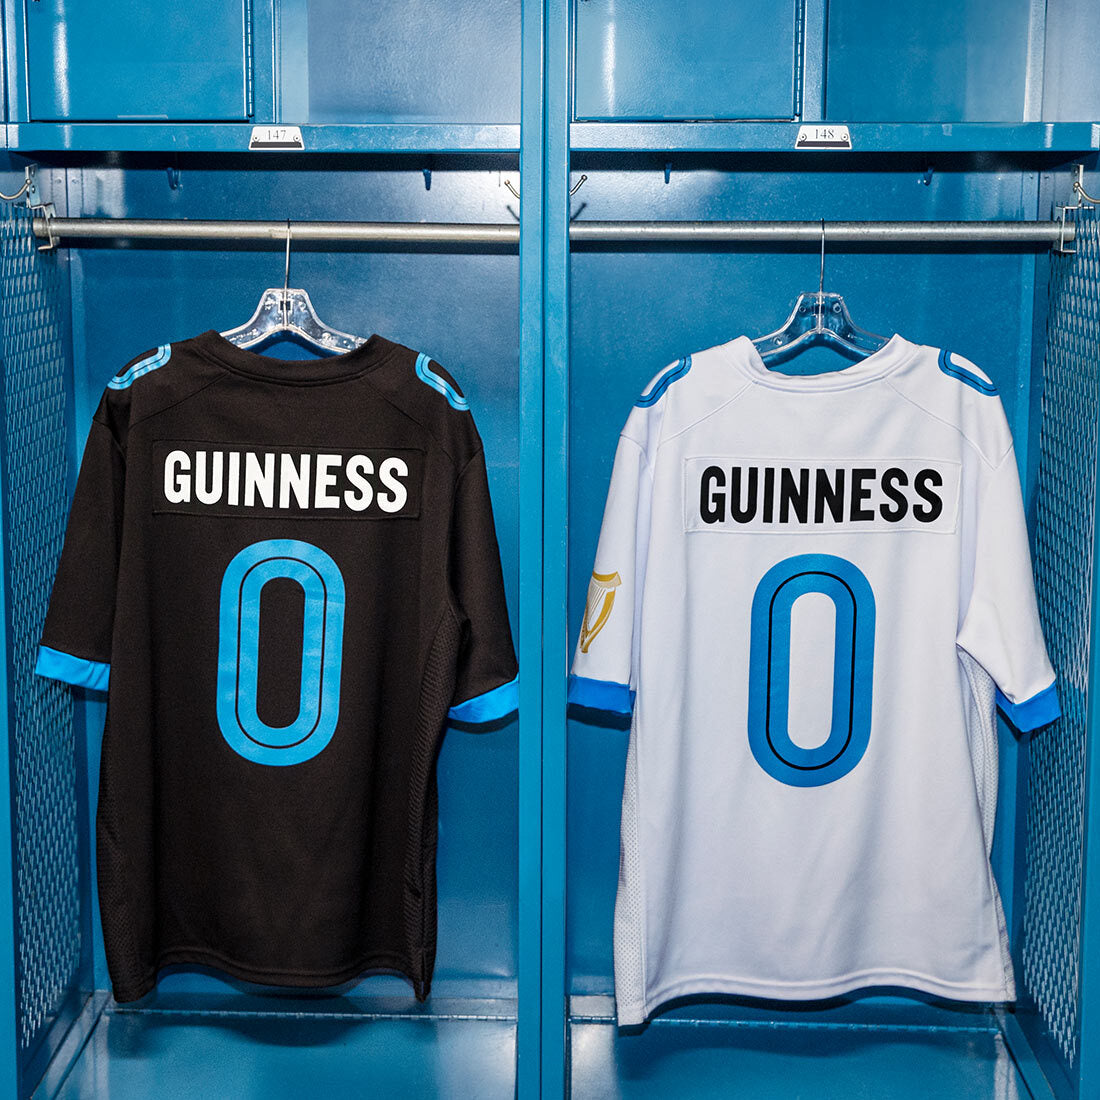 Two Guinness Webstore US white football jerseys hanging in a locker.